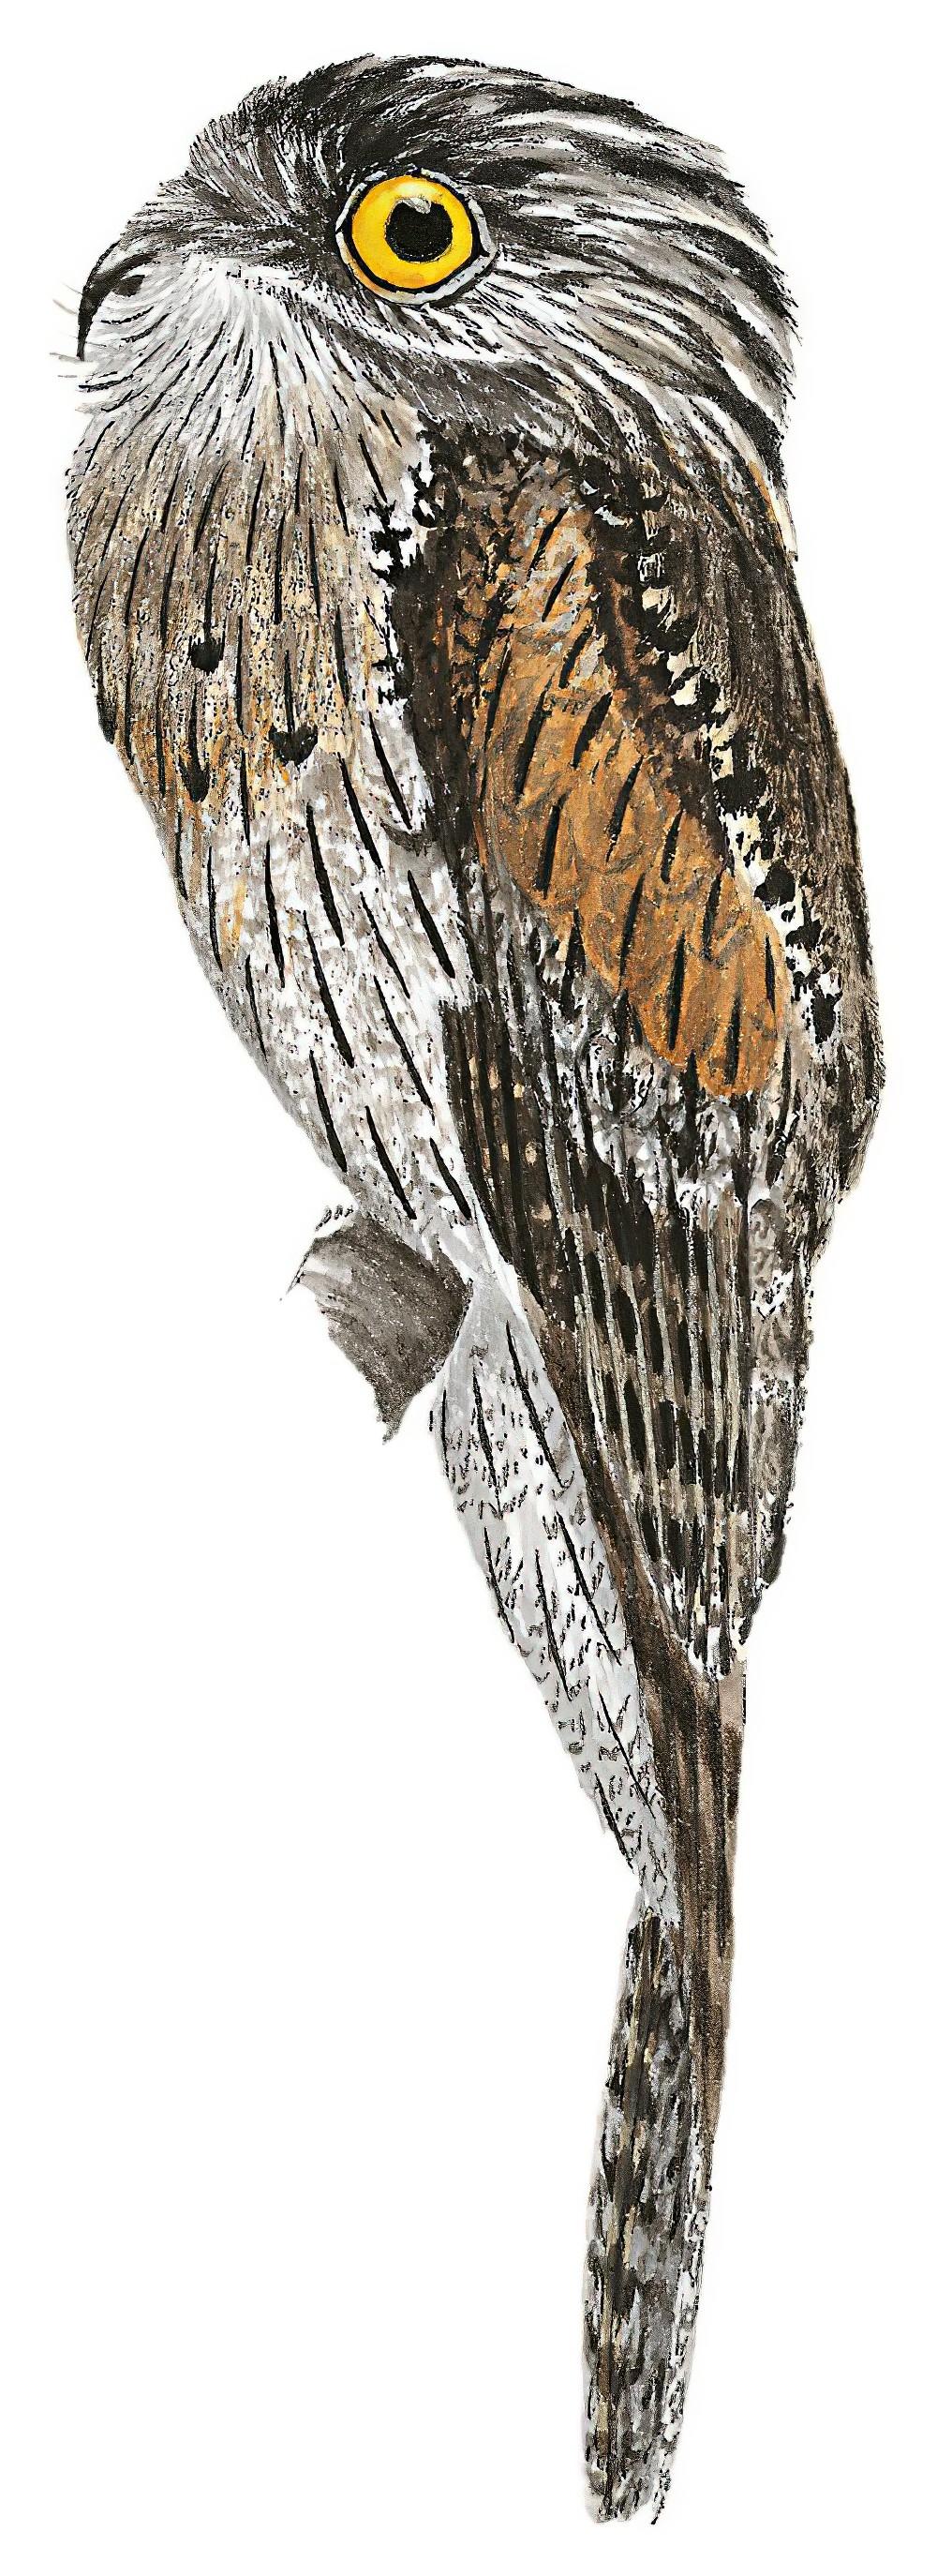 Northern Potoo / Nyctibius jamaicensis